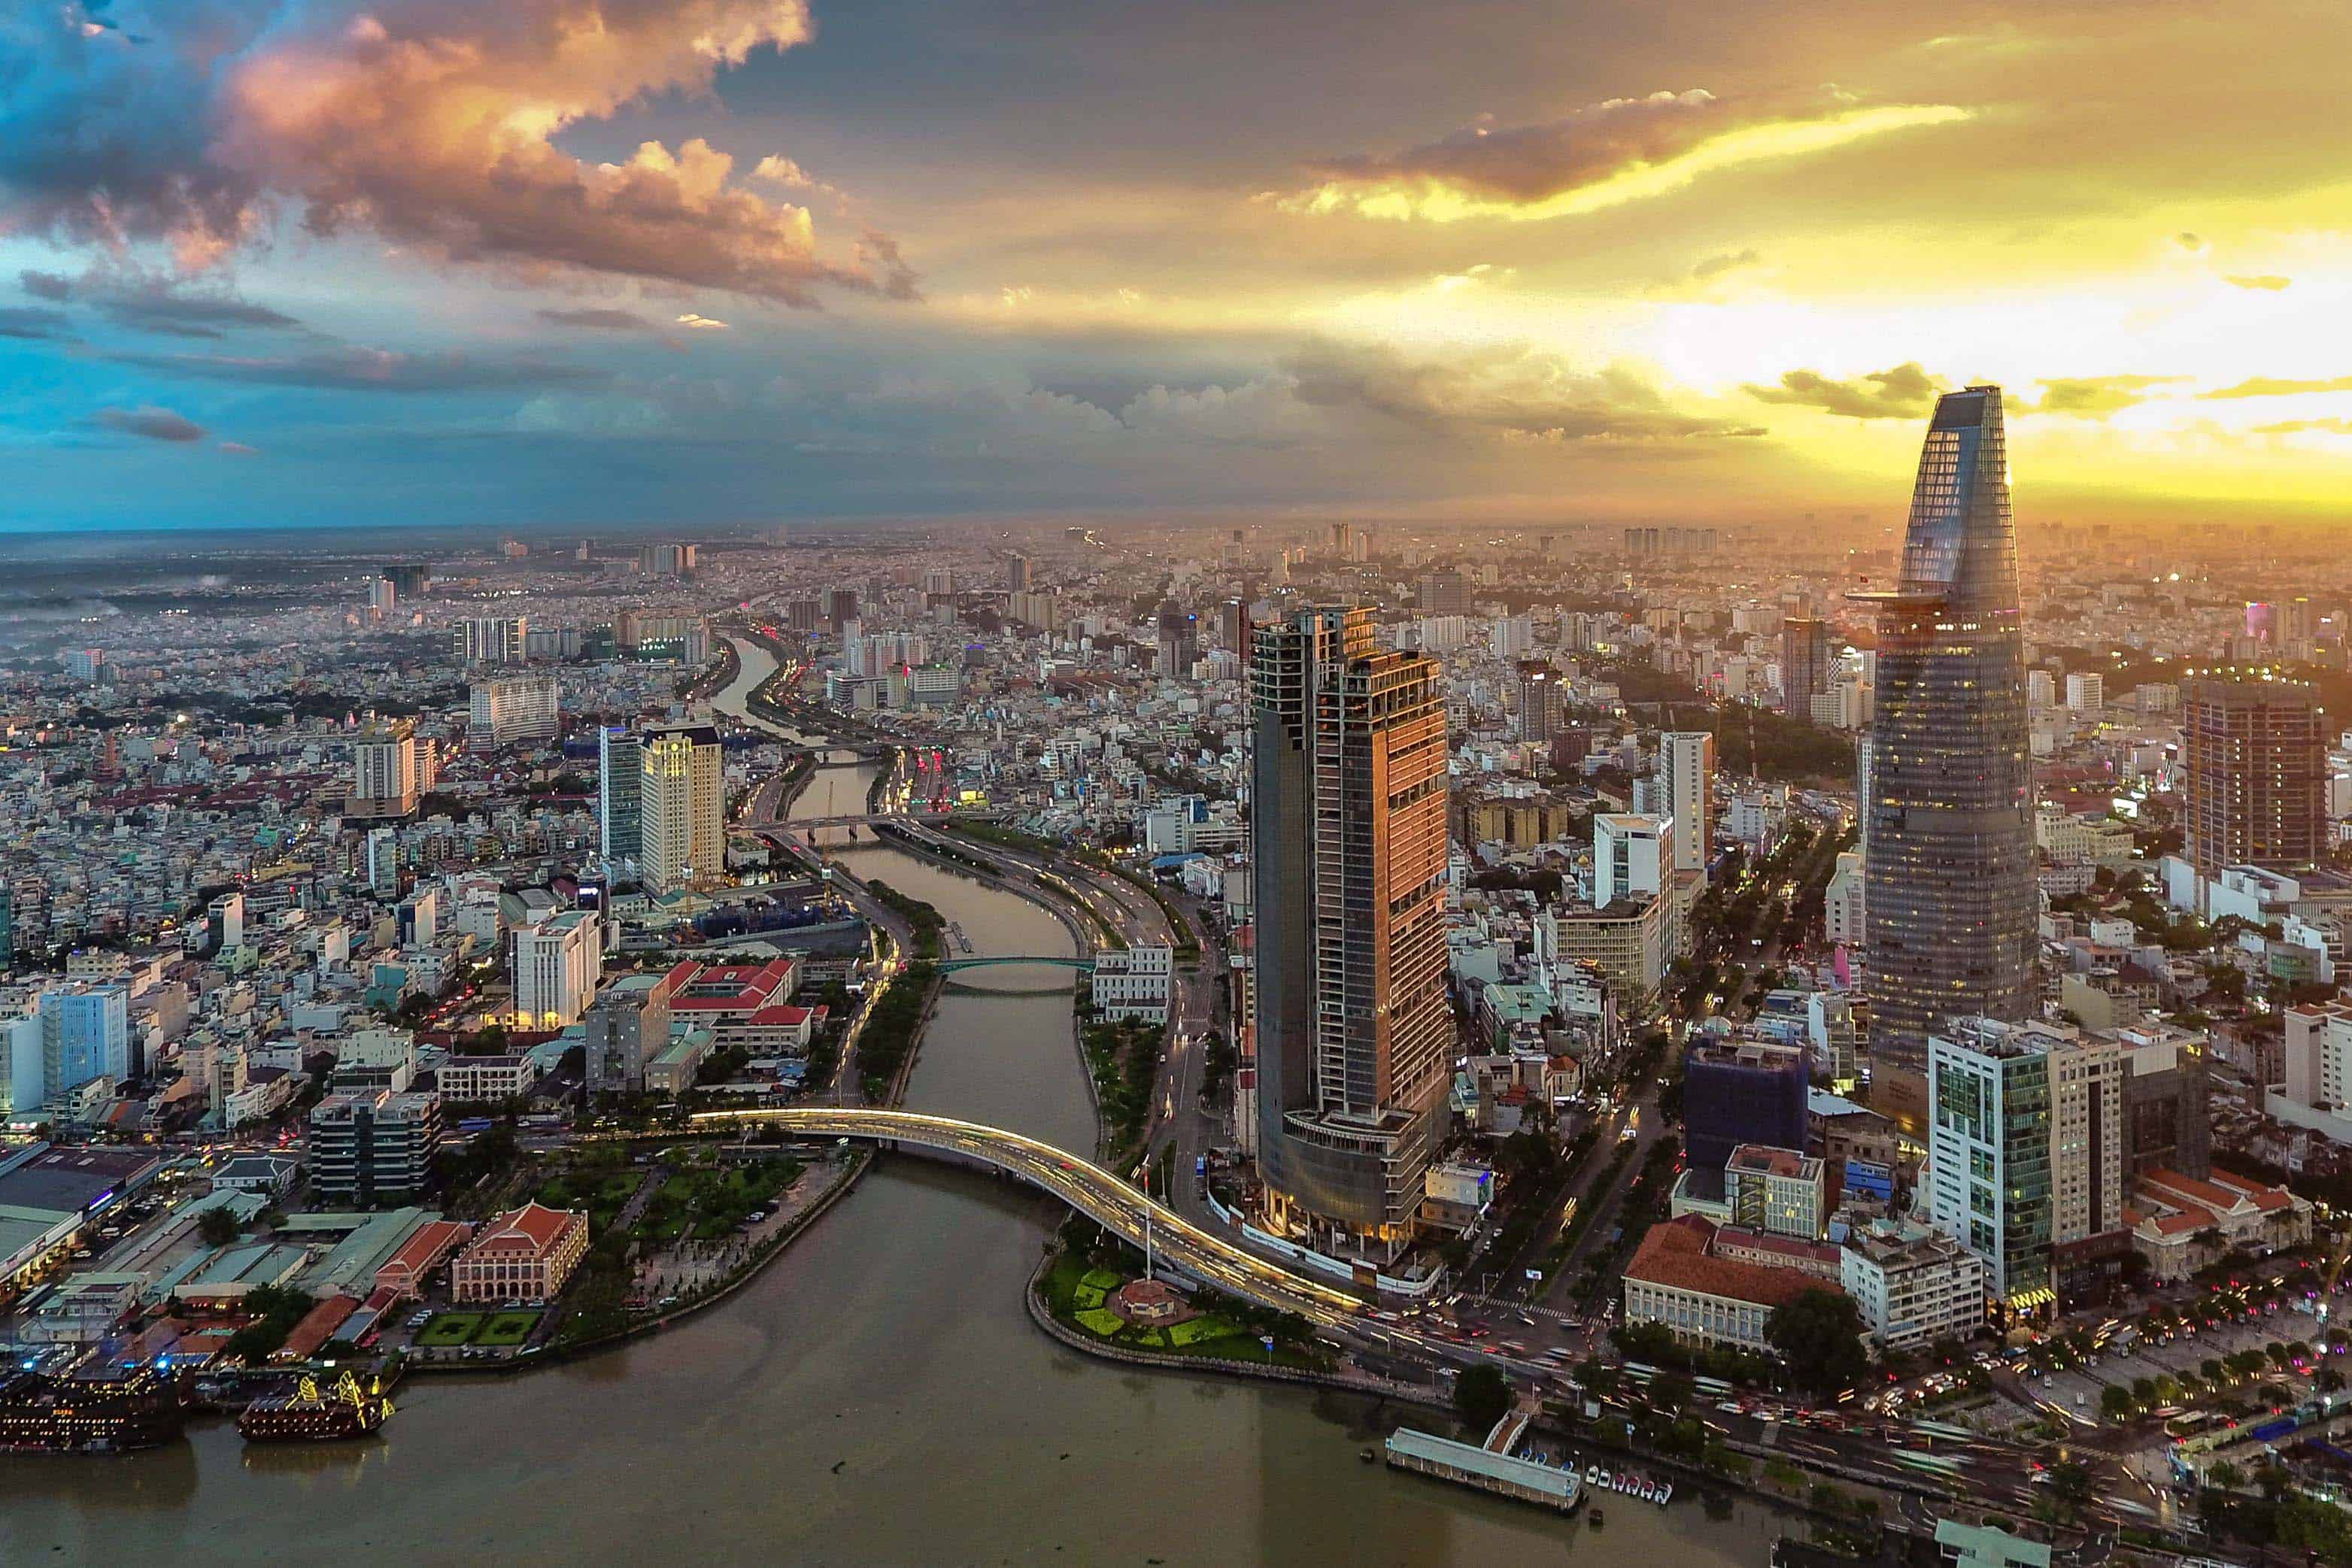 Explore the Vibrant Cities of Saigon